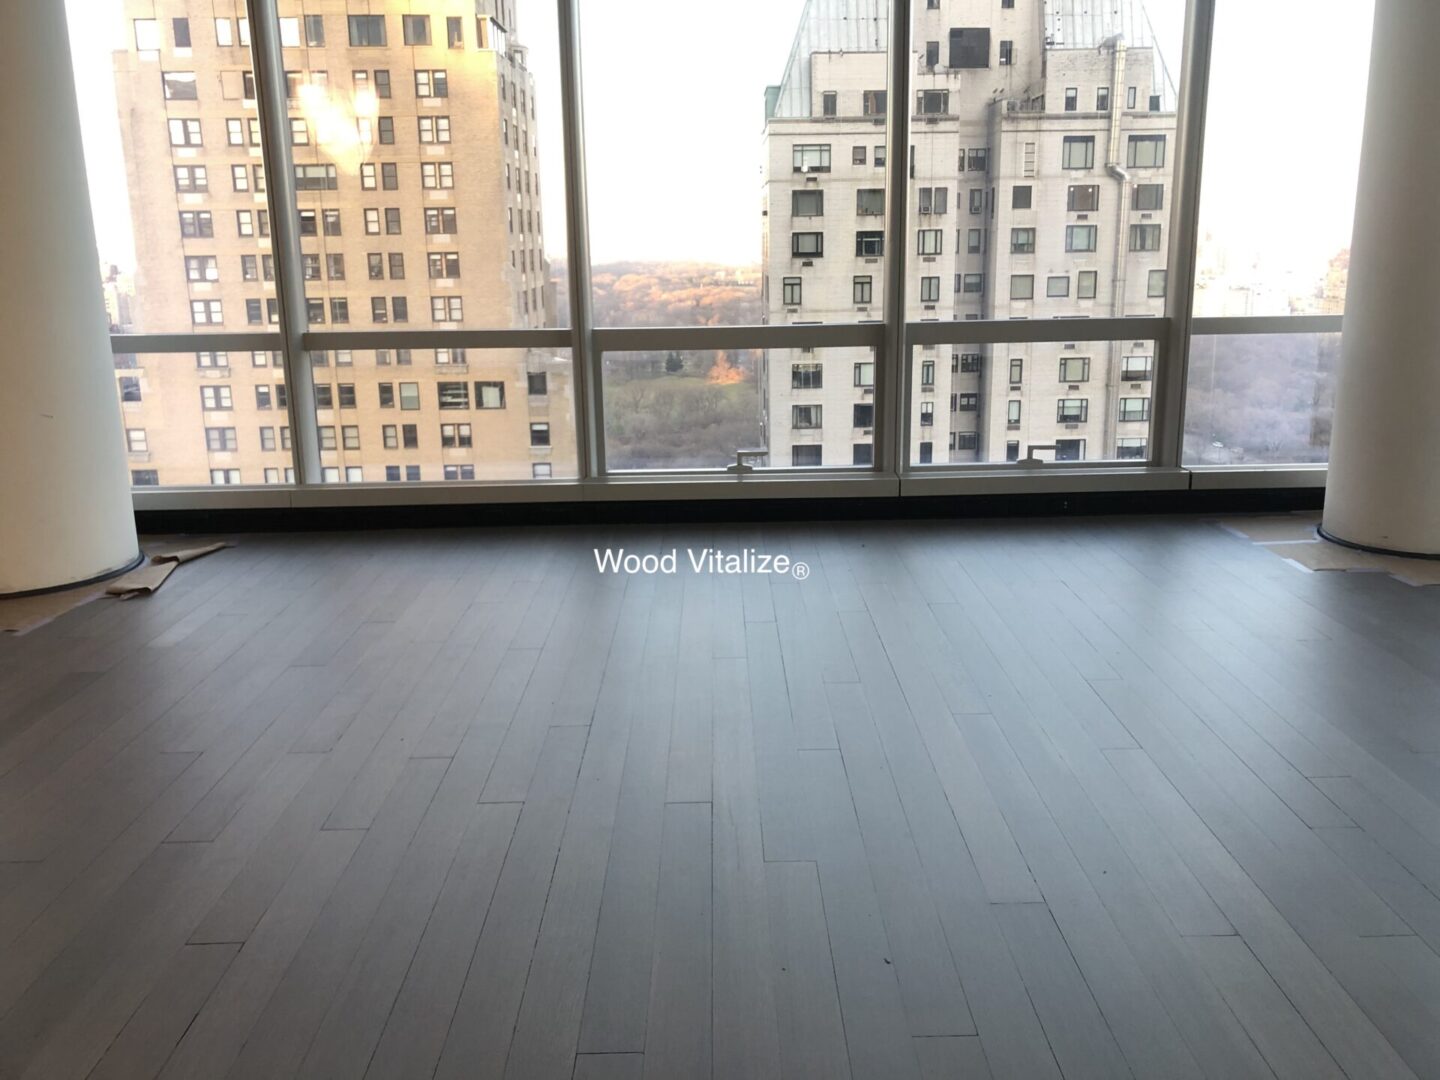 Wood Floor Refinishing, staining, and dustless sanding in Manhattan, NYC.